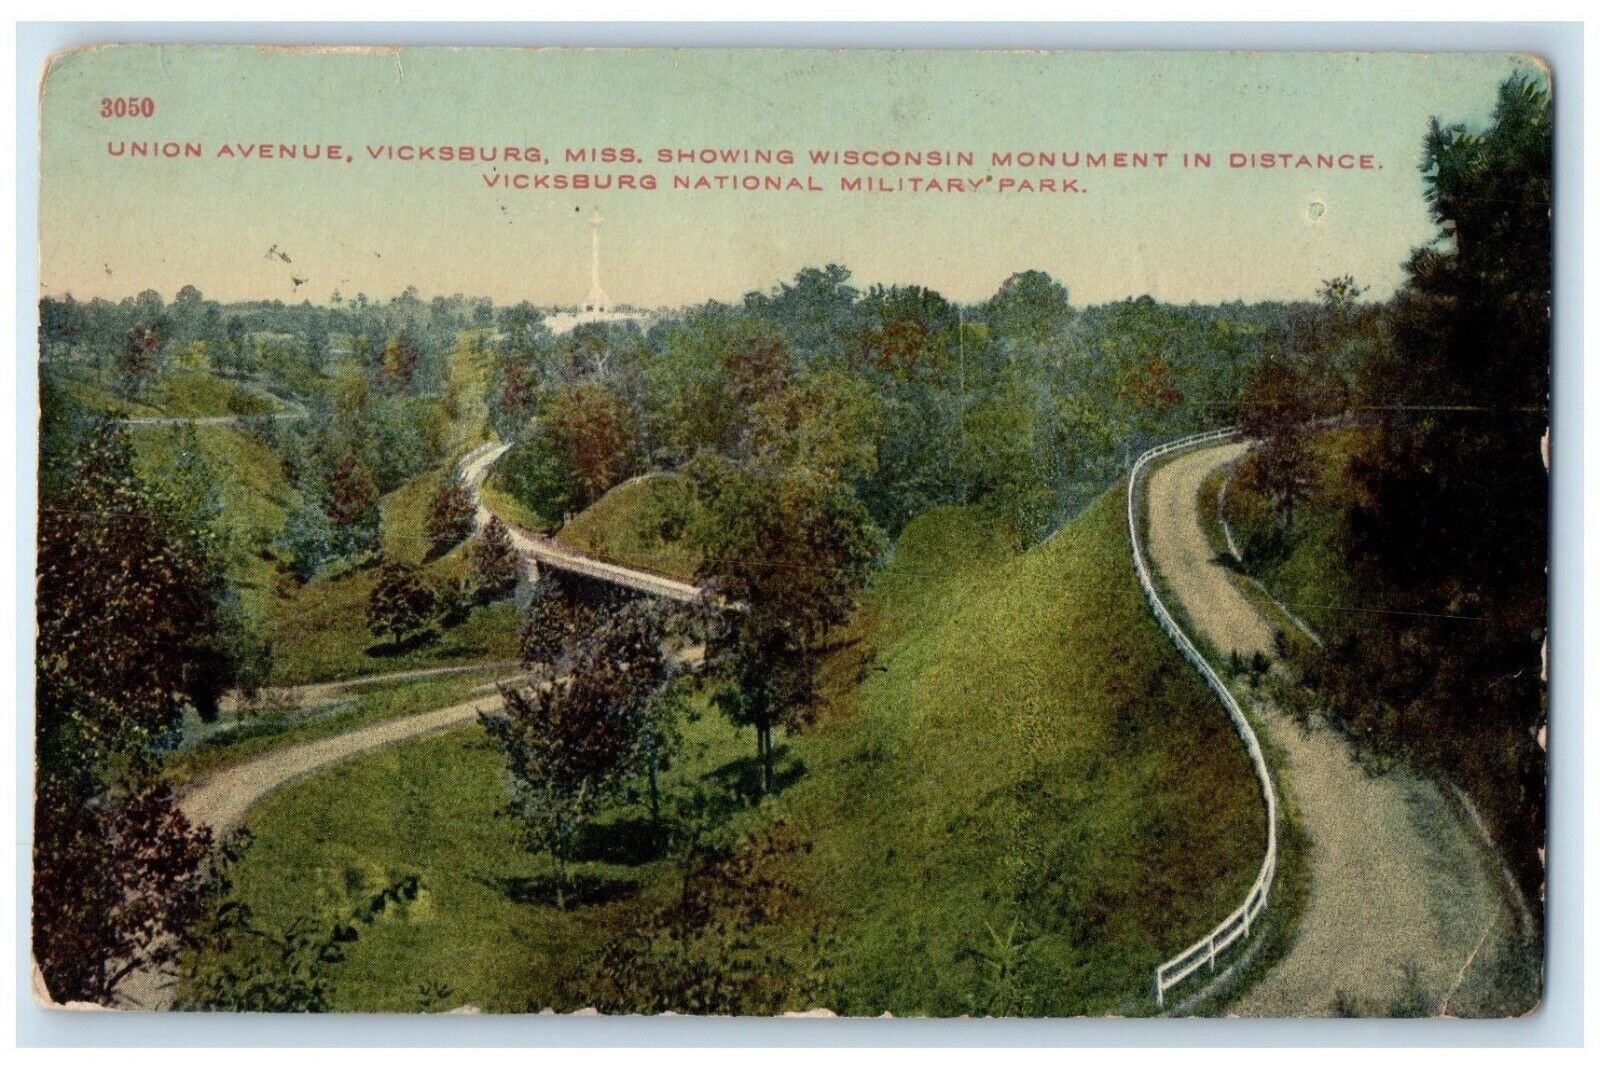 1918 Union Avenue National Military Park Vicksburg Mississippi Vintage Postcard